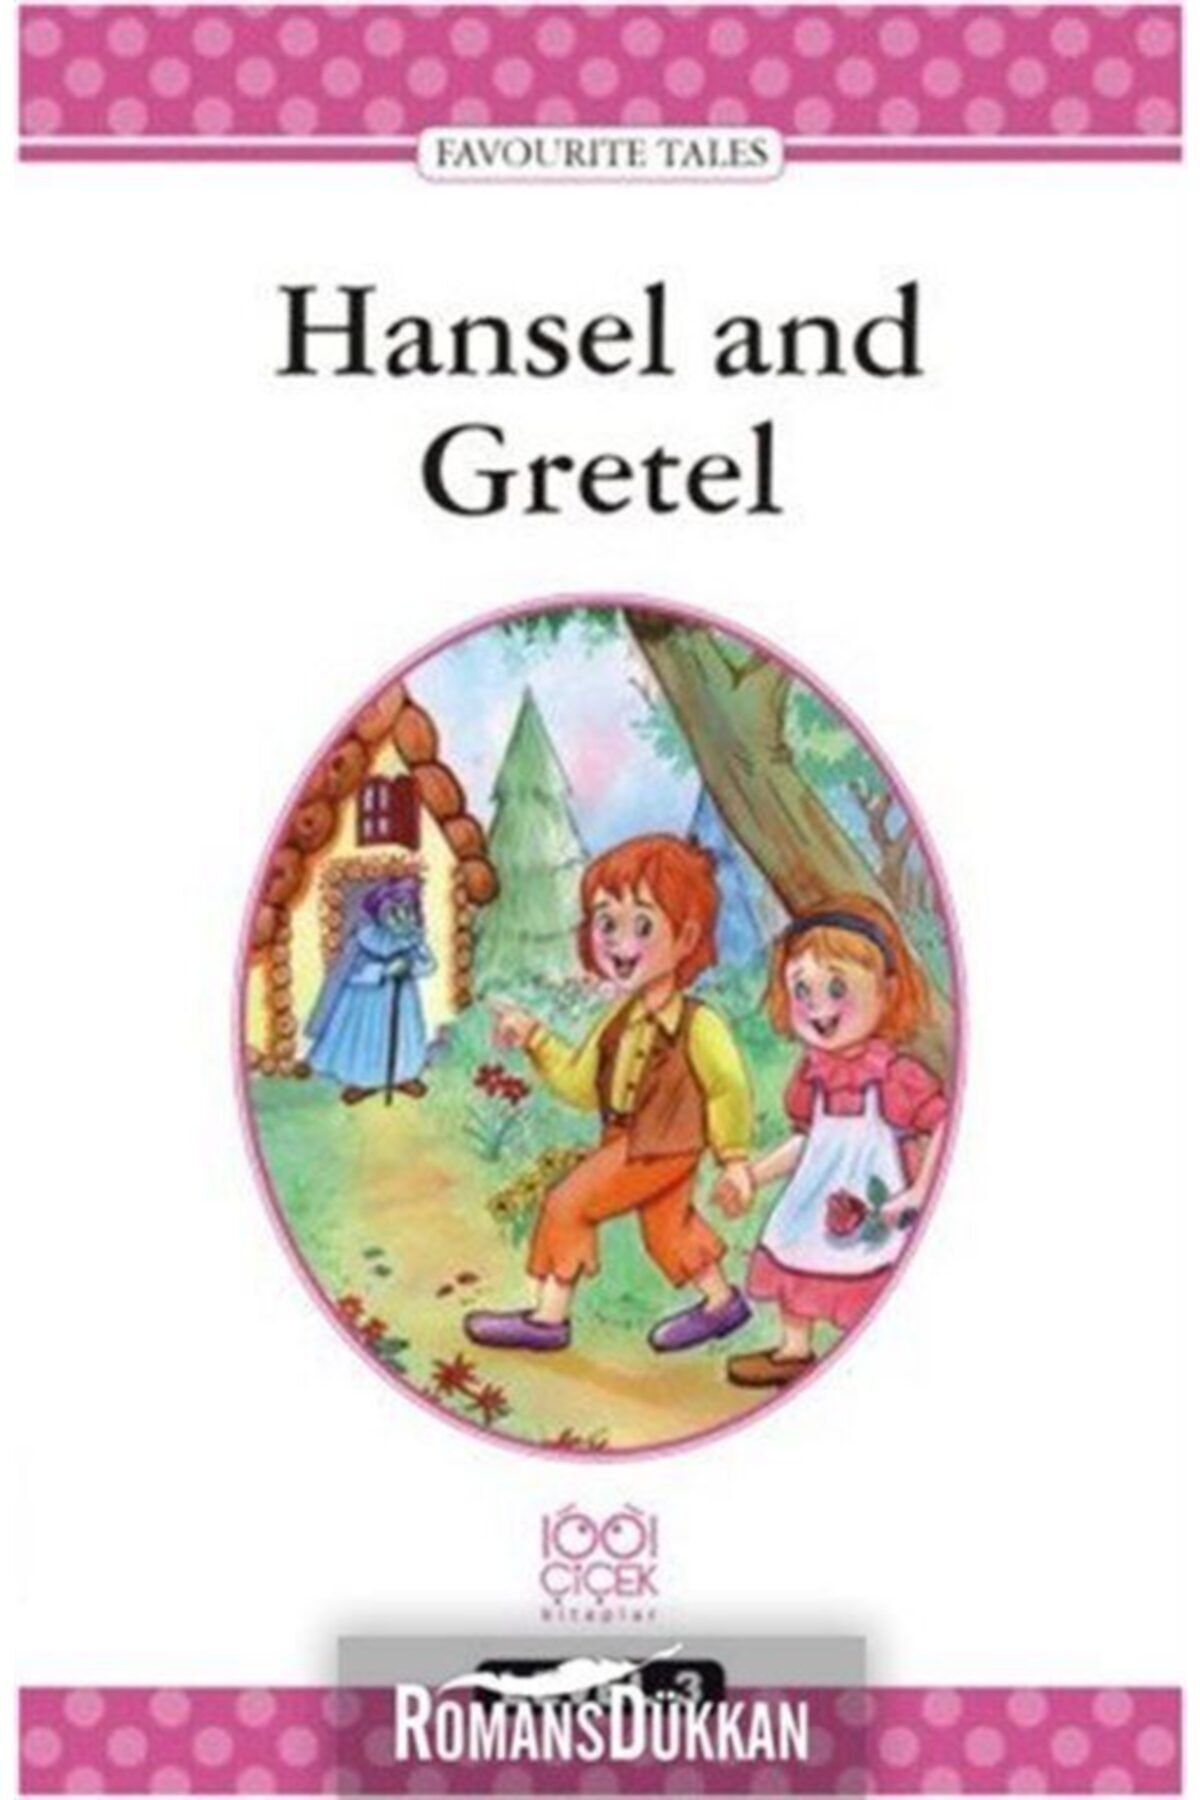 1001 Çiçek Kitaplar Level Books - Level 3 - Hansel And Gretel